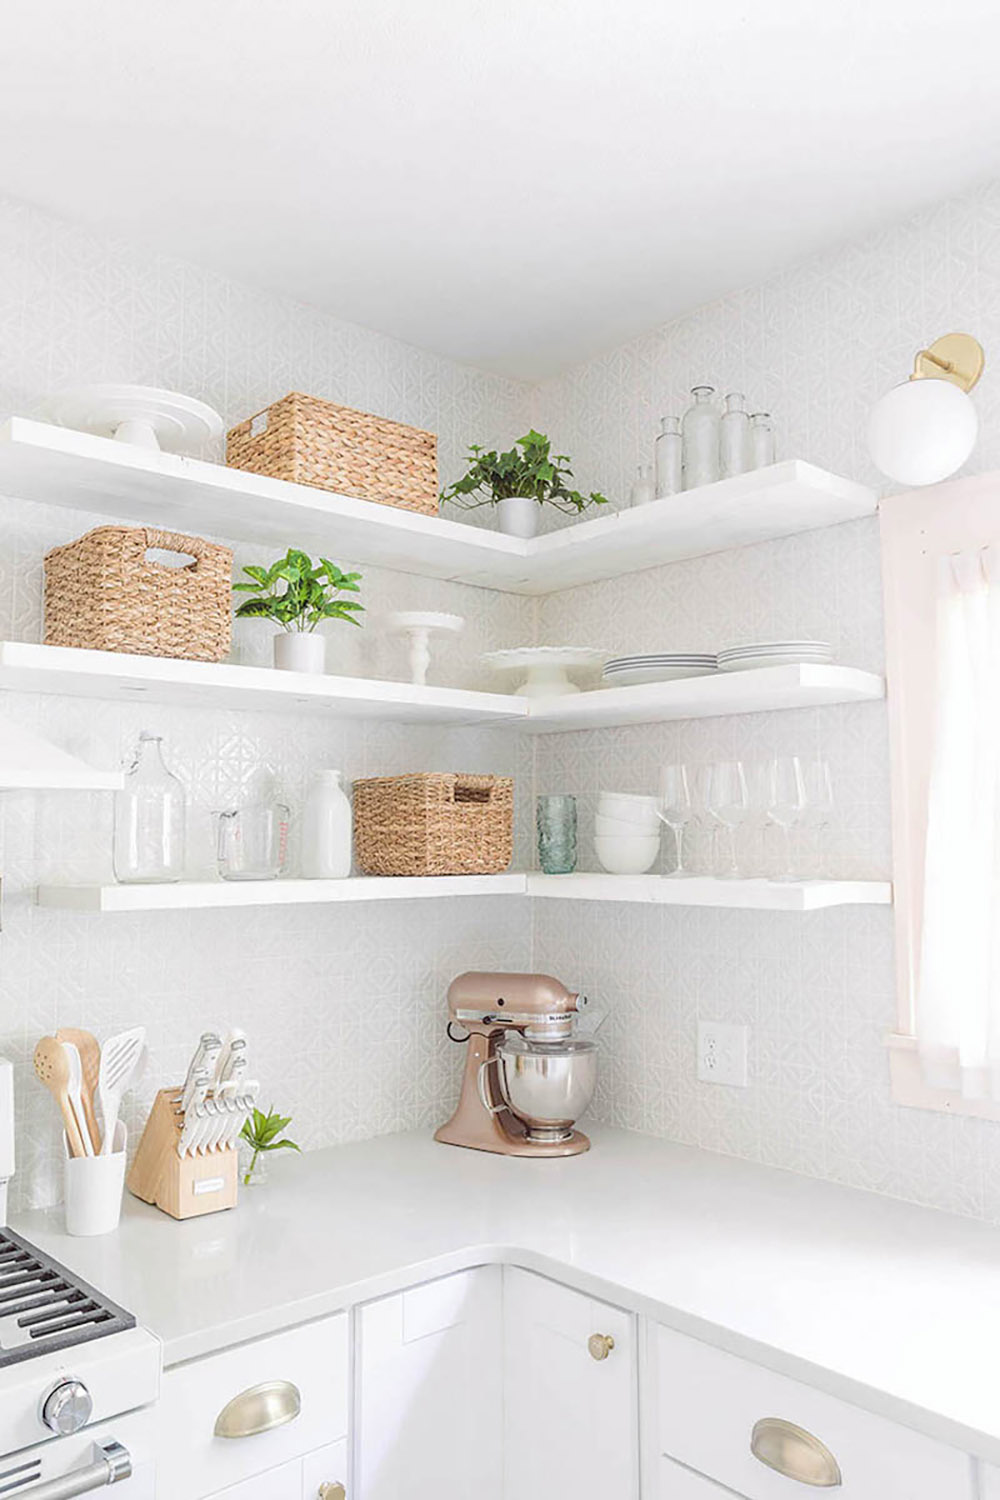 Floating kitchen shelves and decor